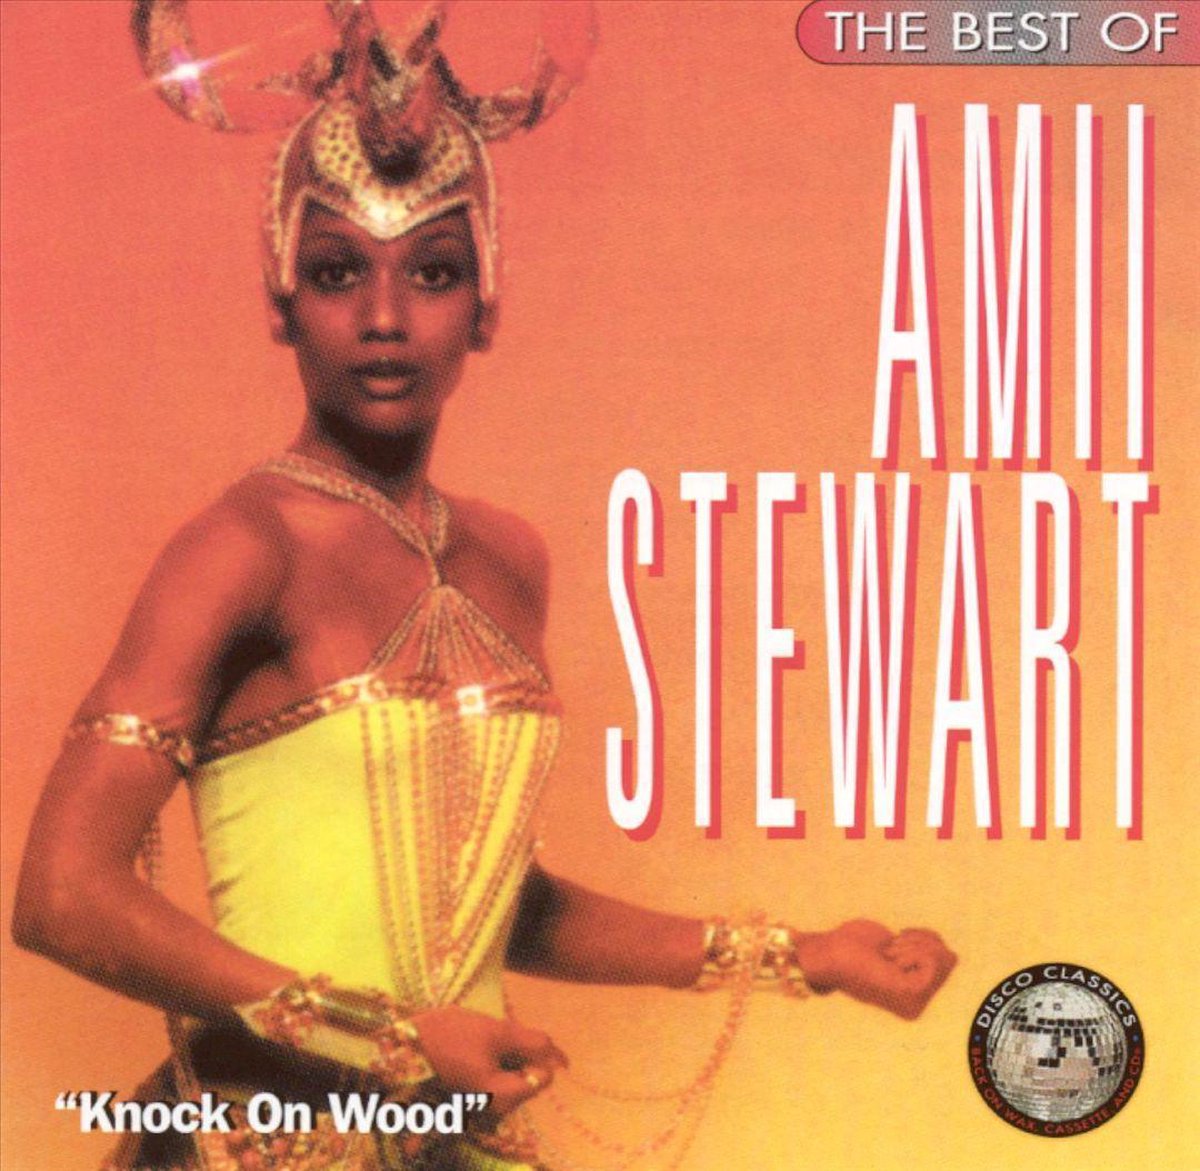 The Best Of Amii Stewart: Knock On Wood - Amii Stewart